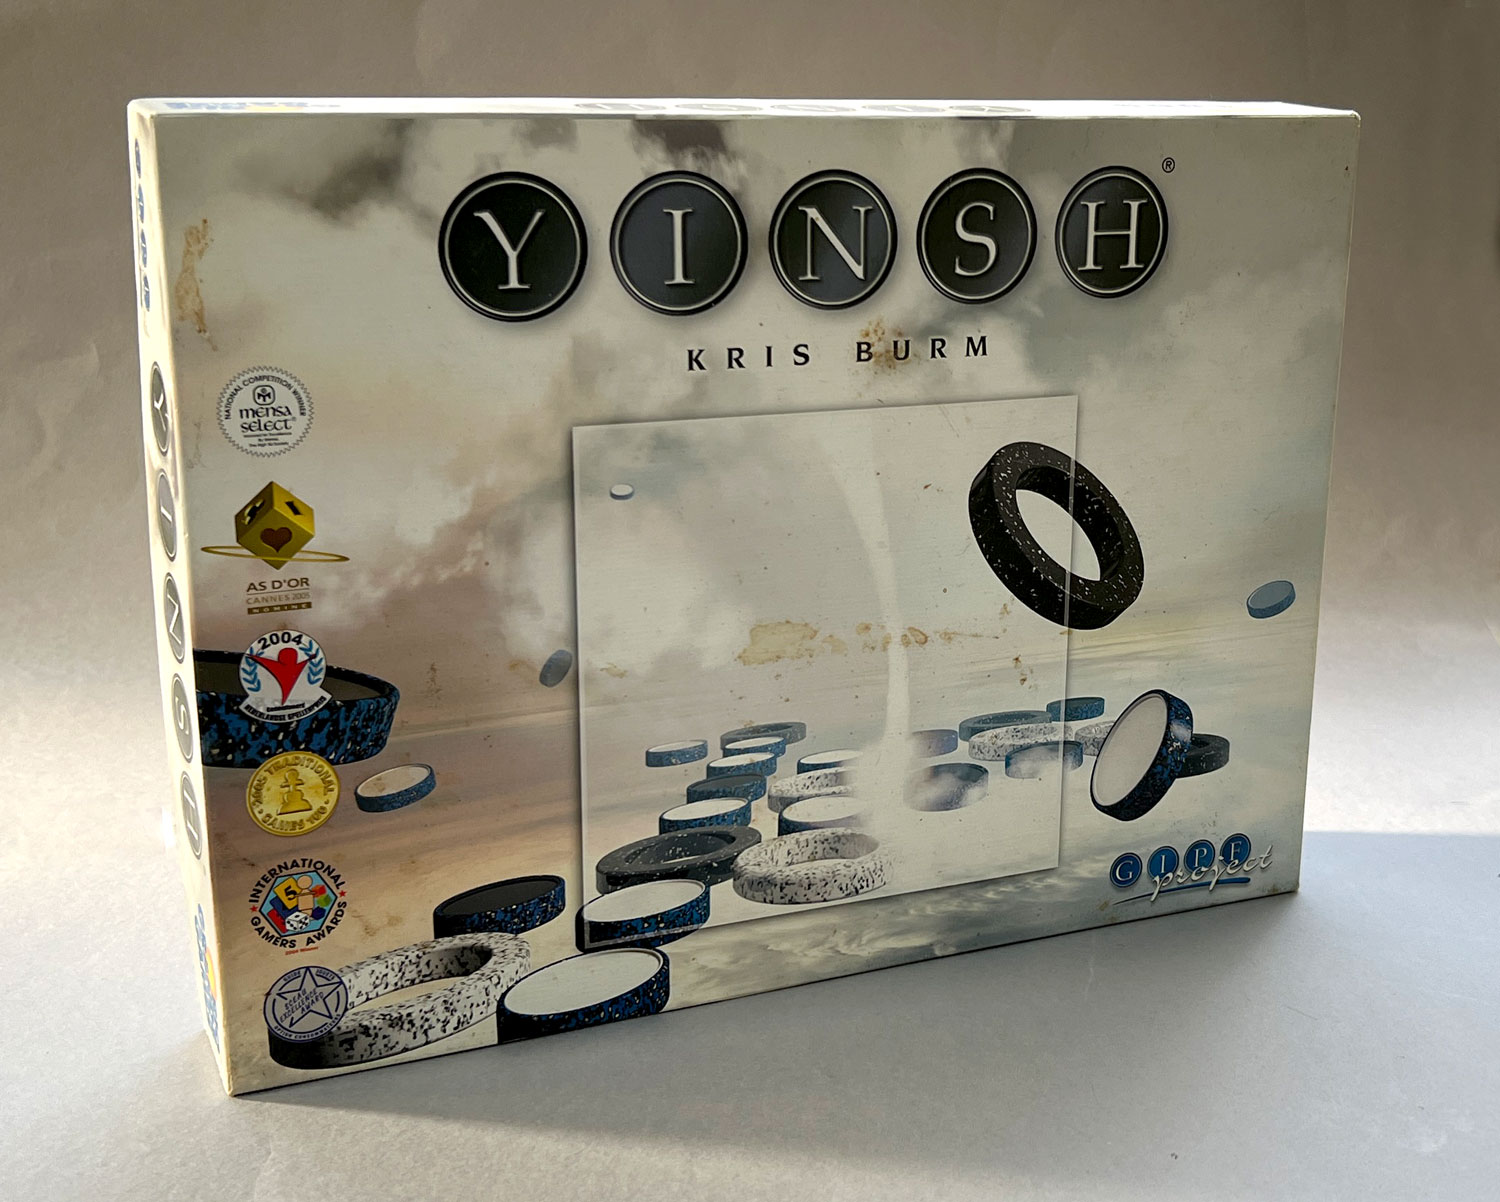 YINSH: The box